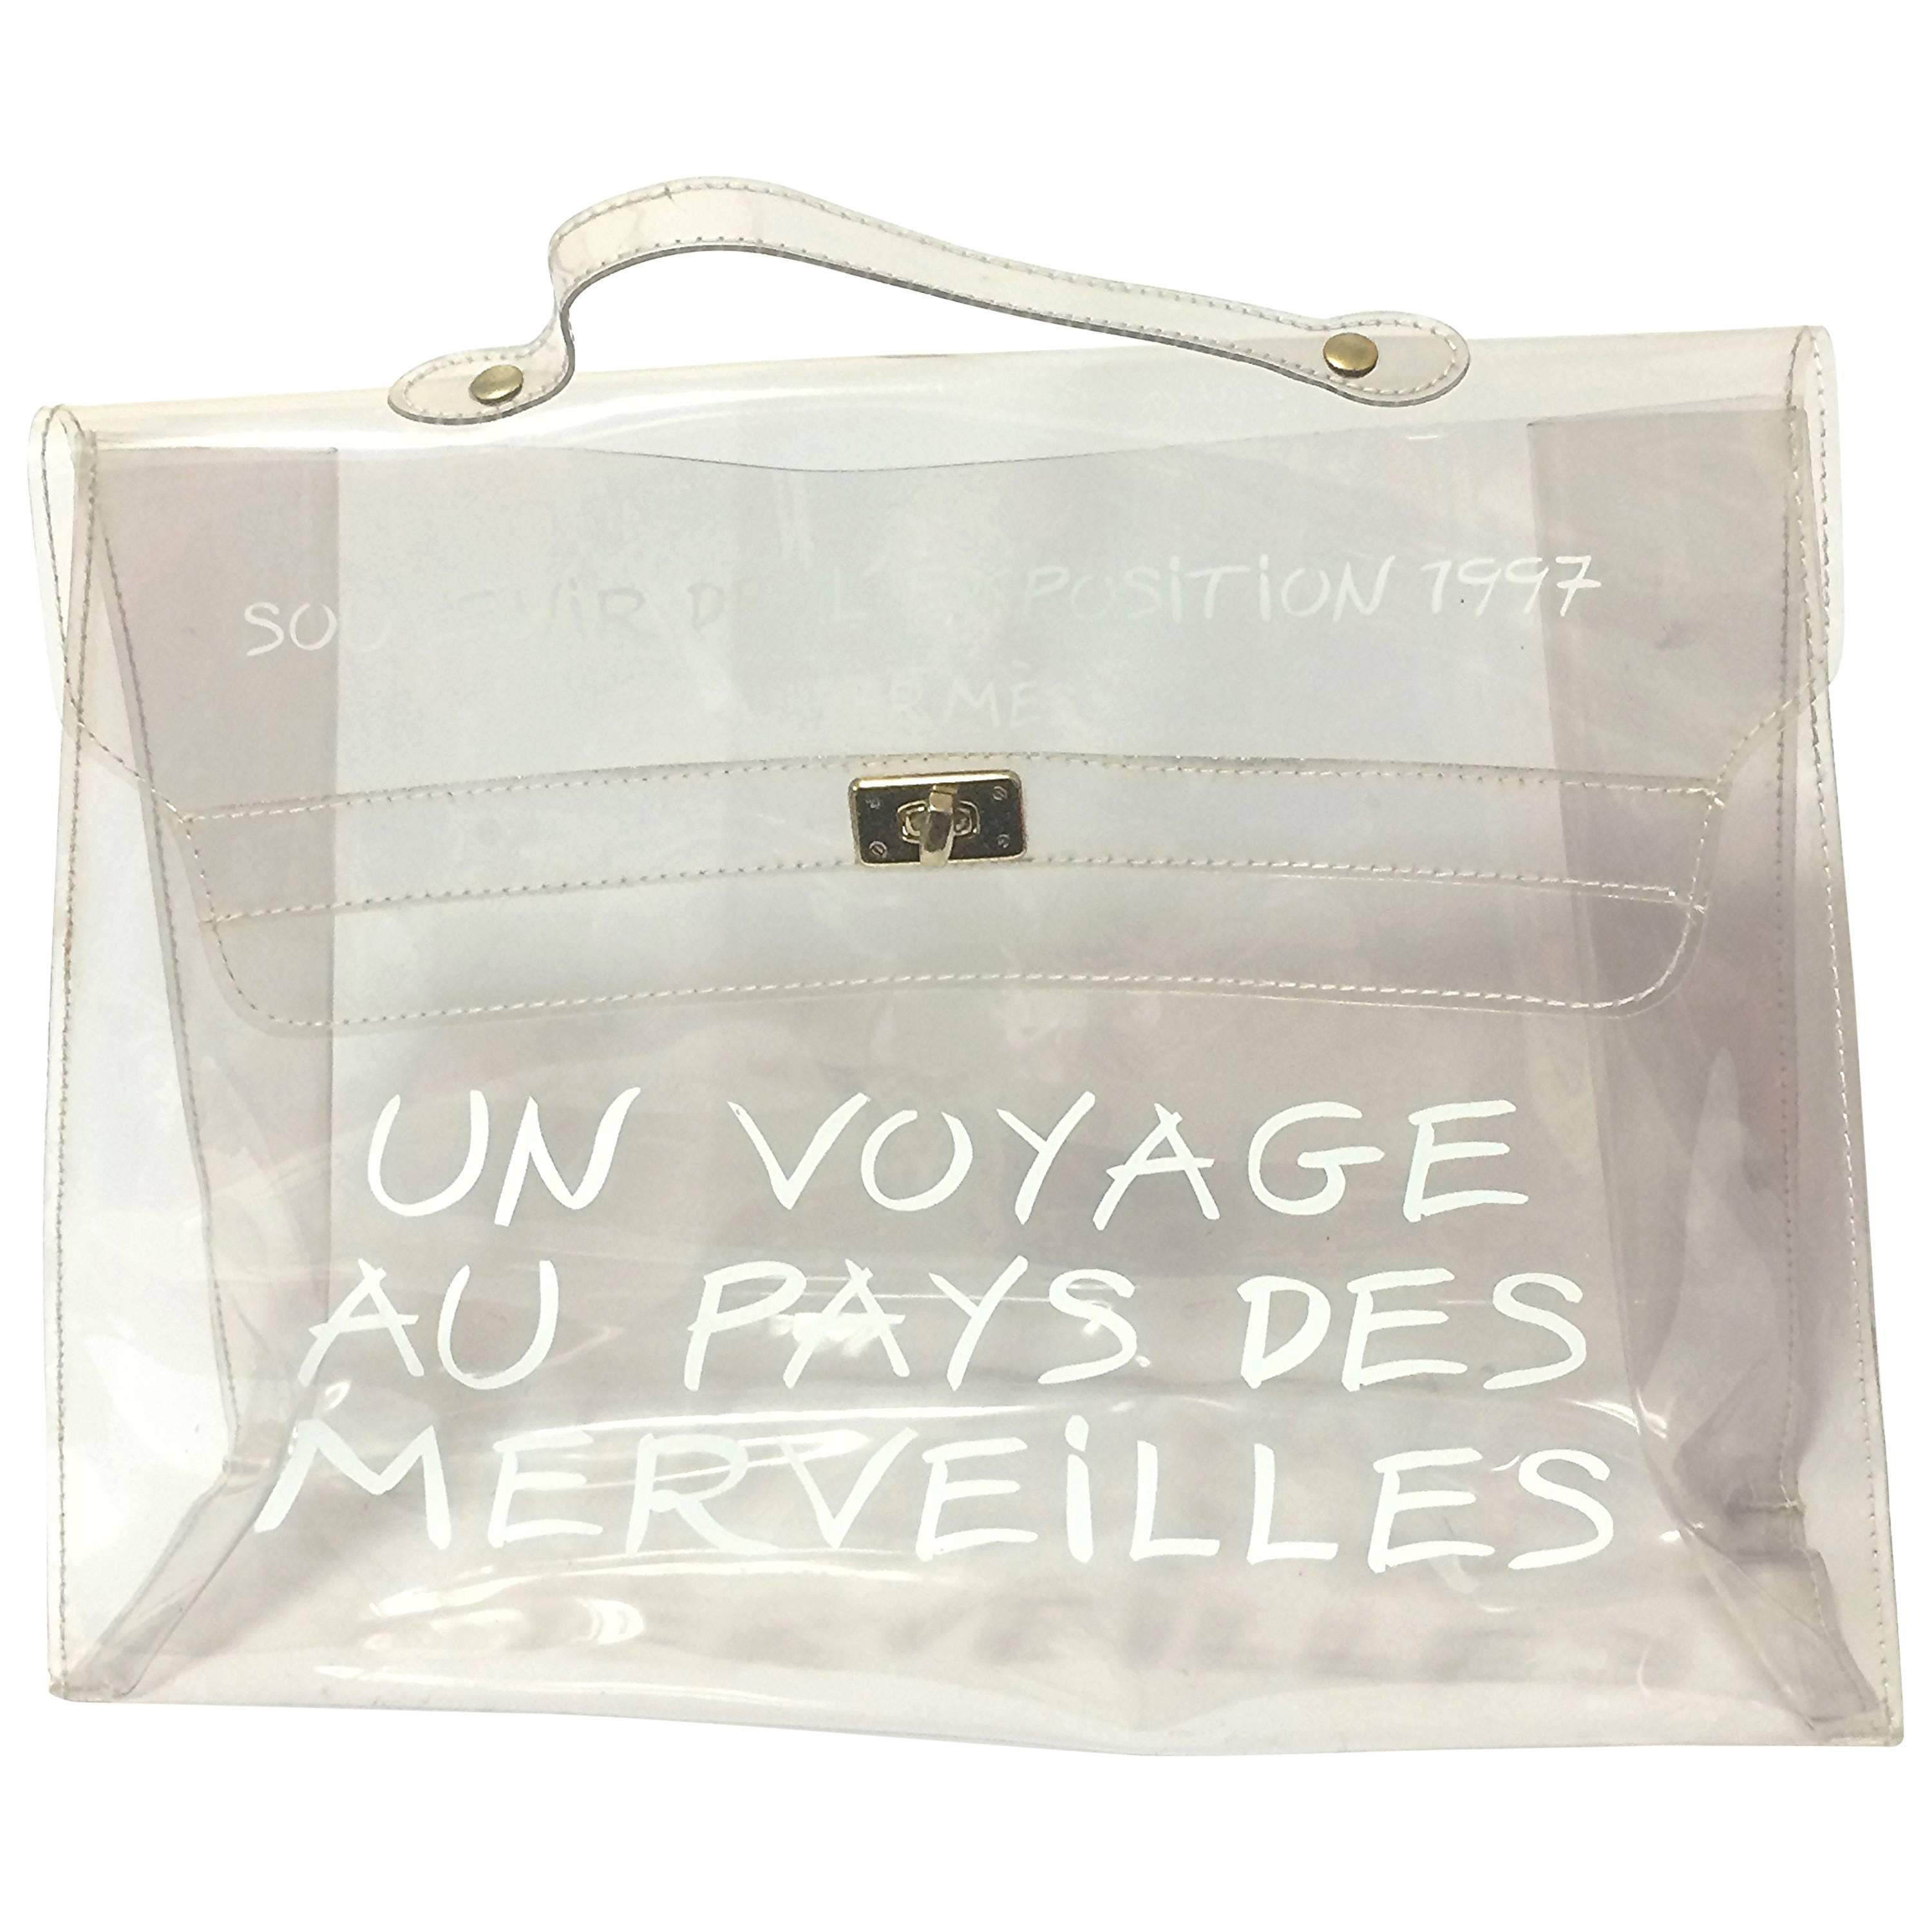 Vintage Hermes a rare transparent clear vinyl Kelly bag, Japan limited Edition. 